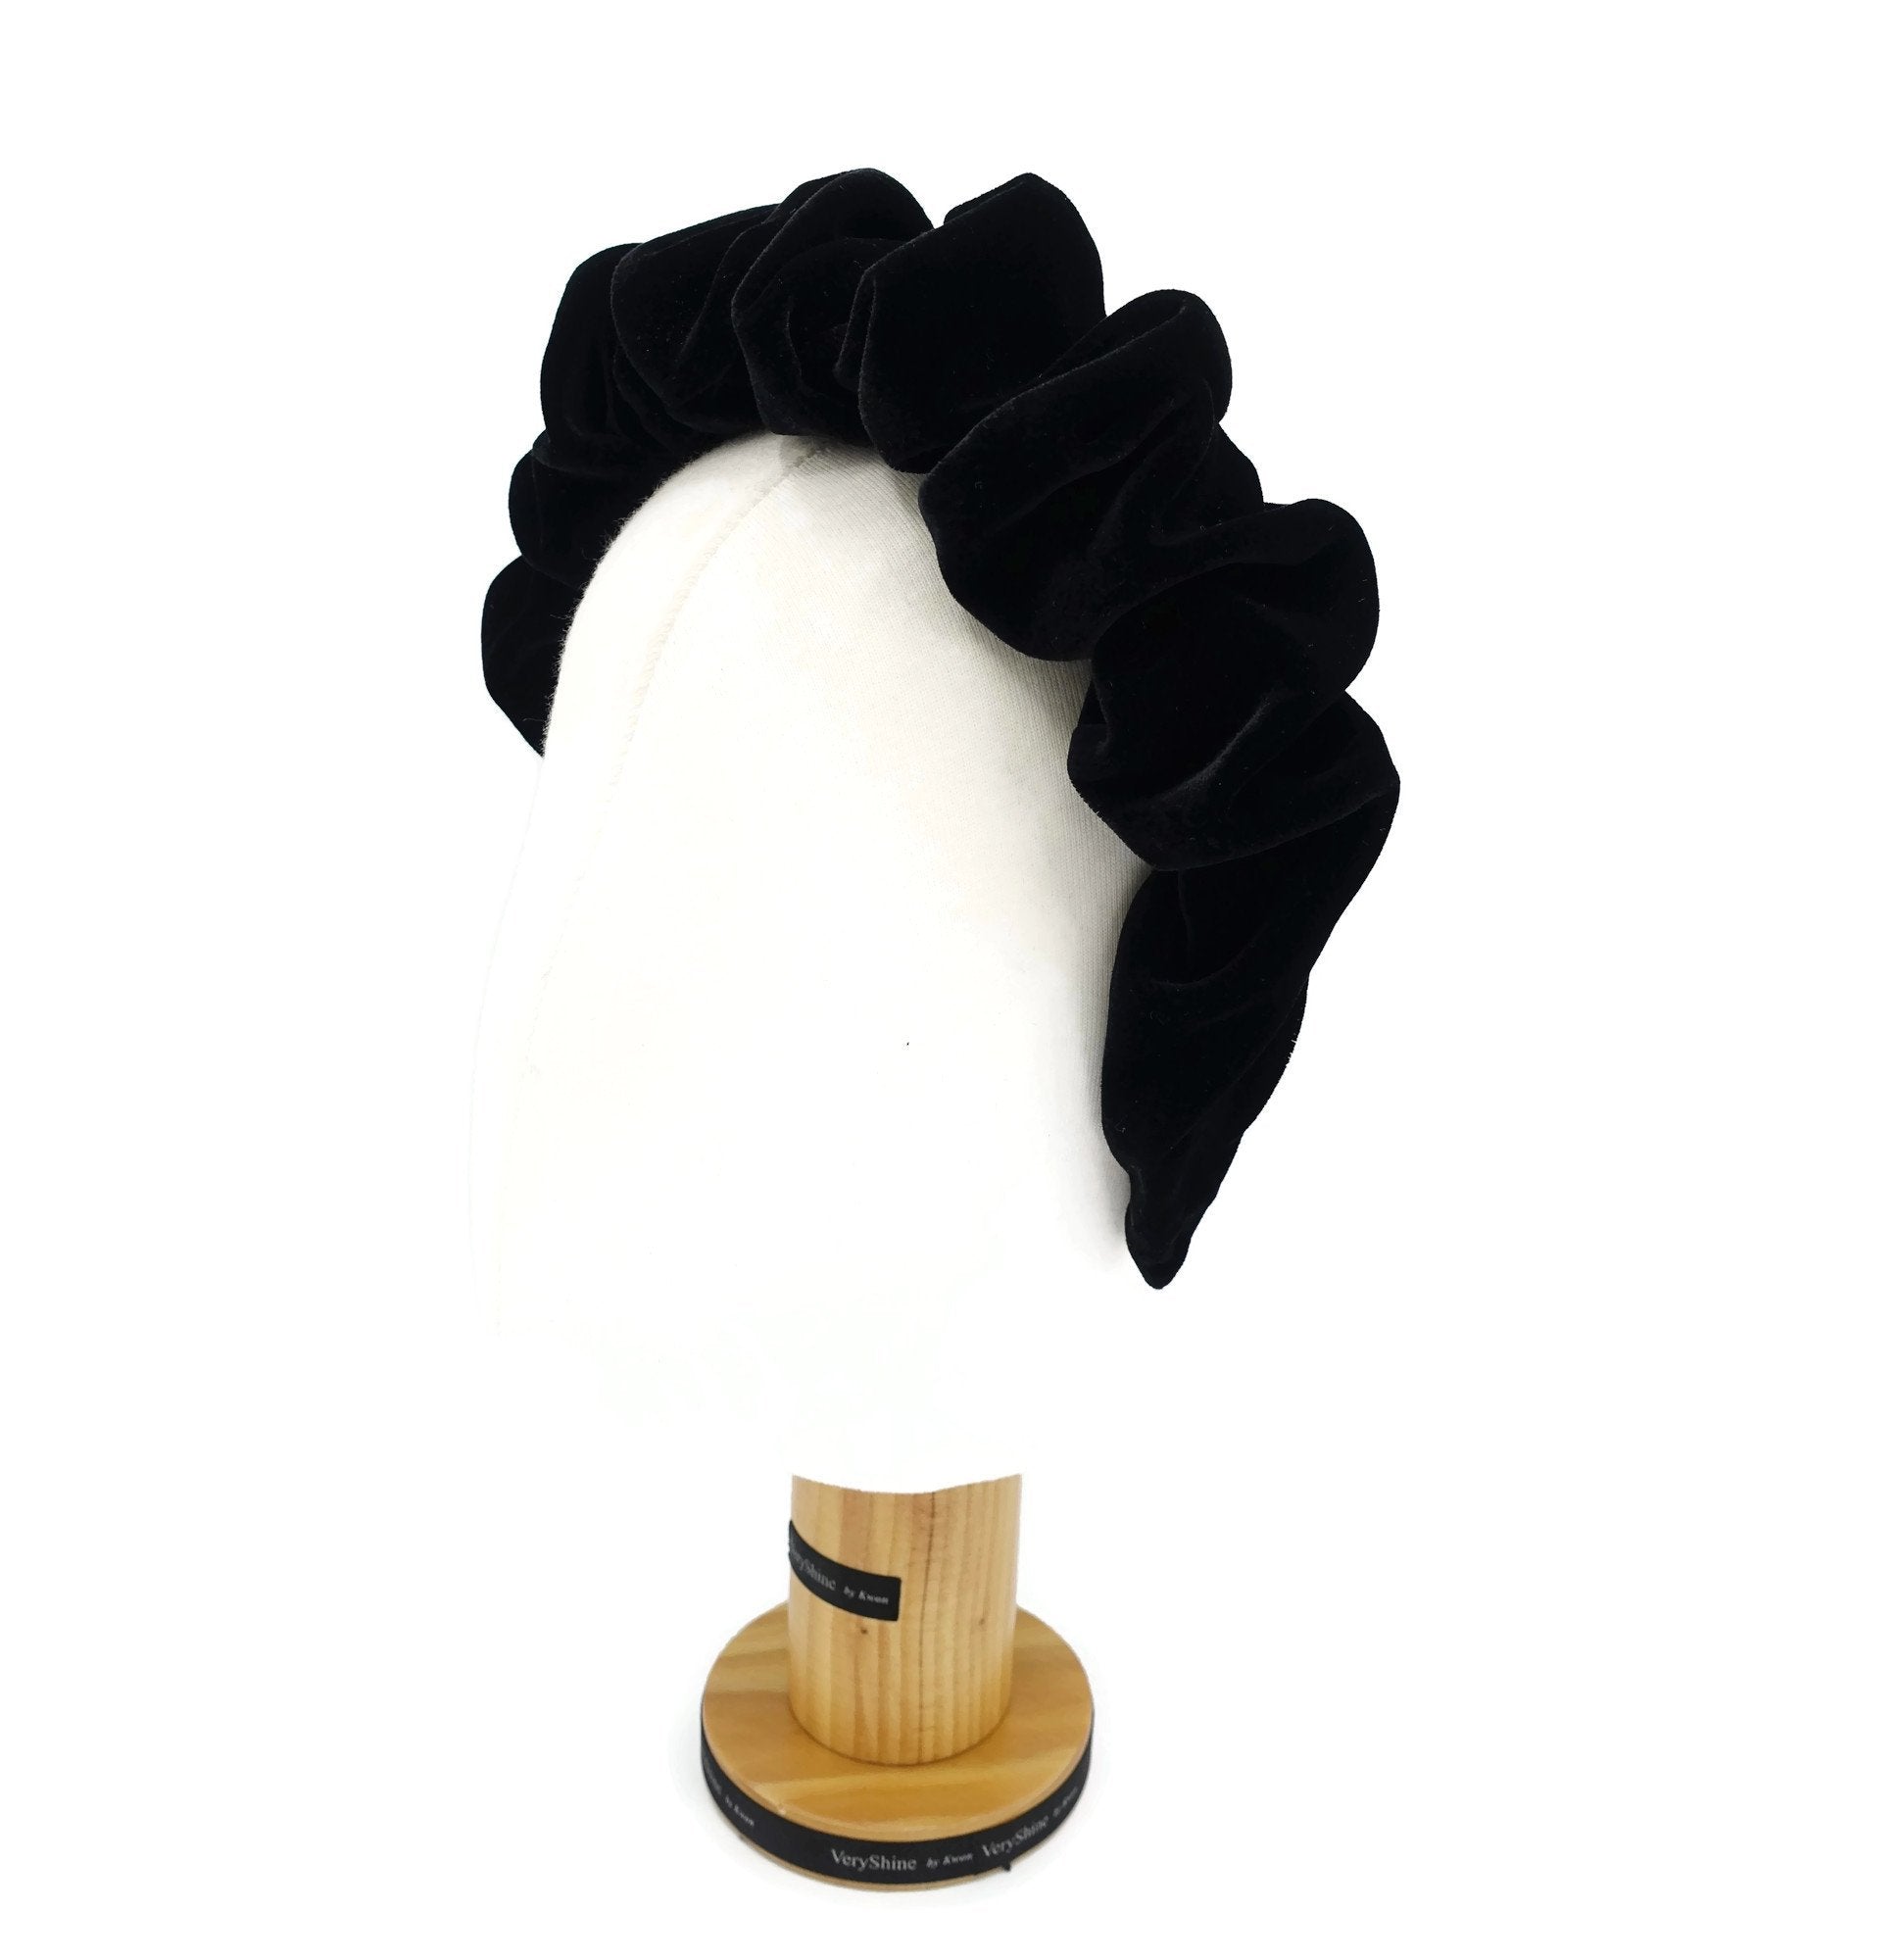 veryshine.com hairband/headband Black silk velvet volume wave headband luxury style black worm hairband for women